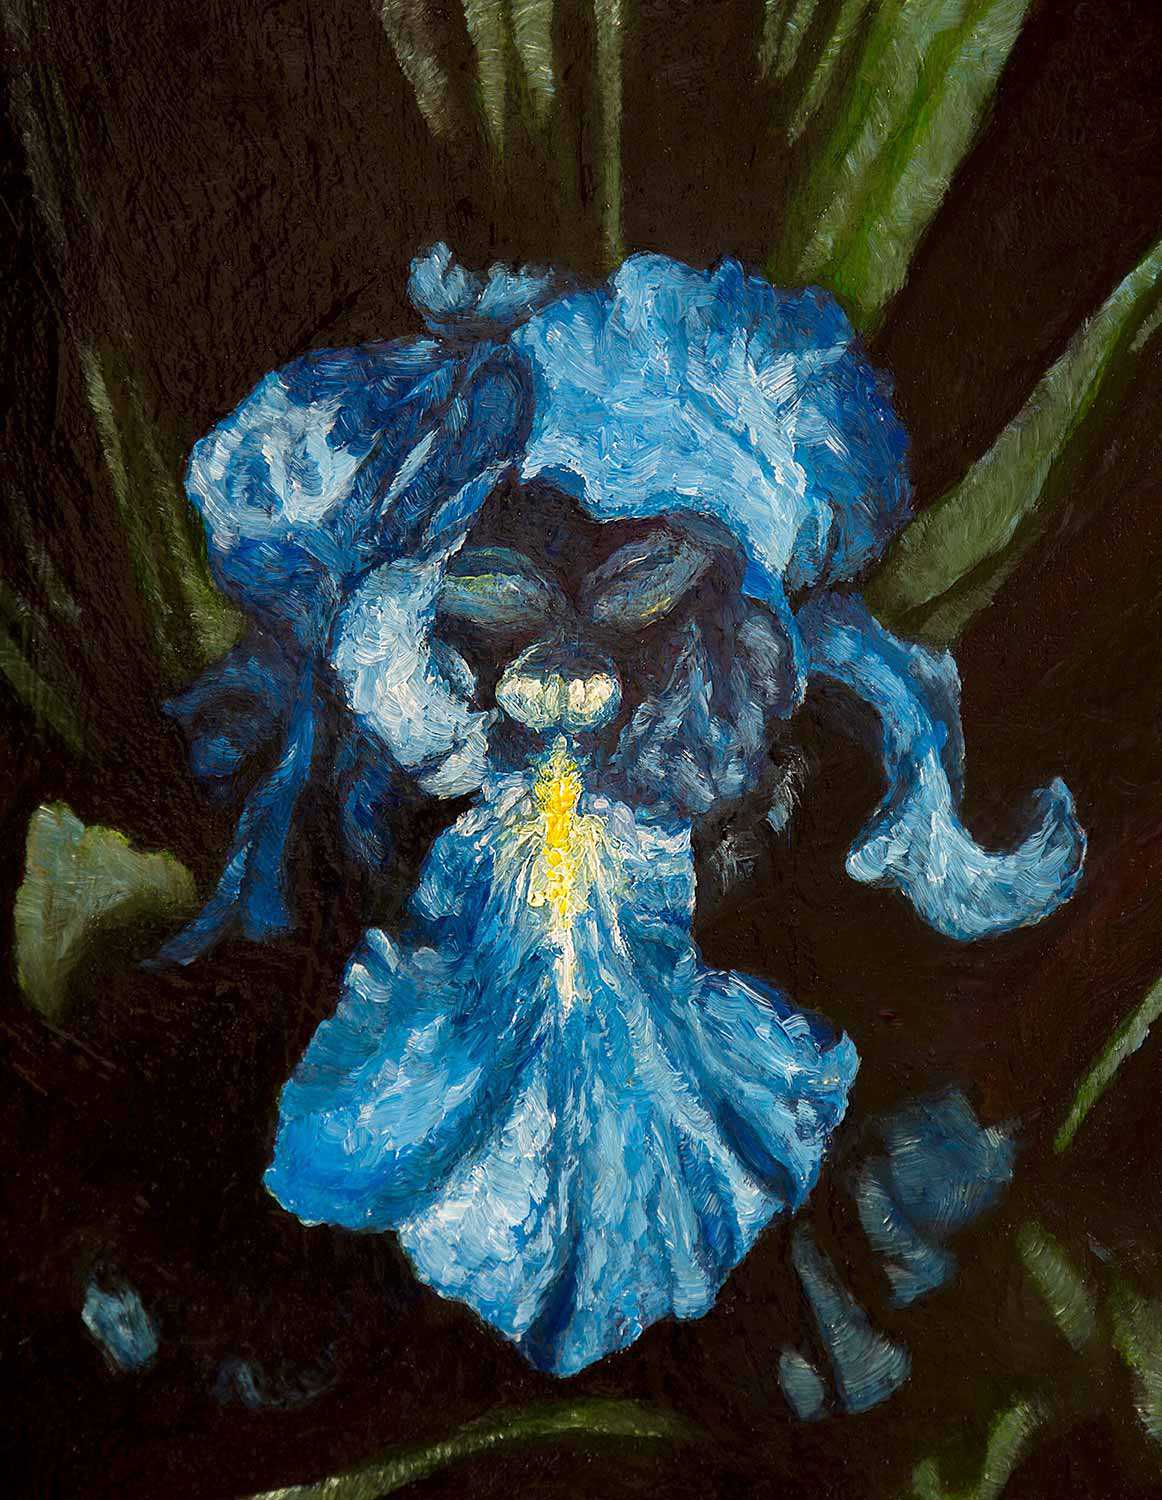 “Iris” by Grayden Laing, oil on panel